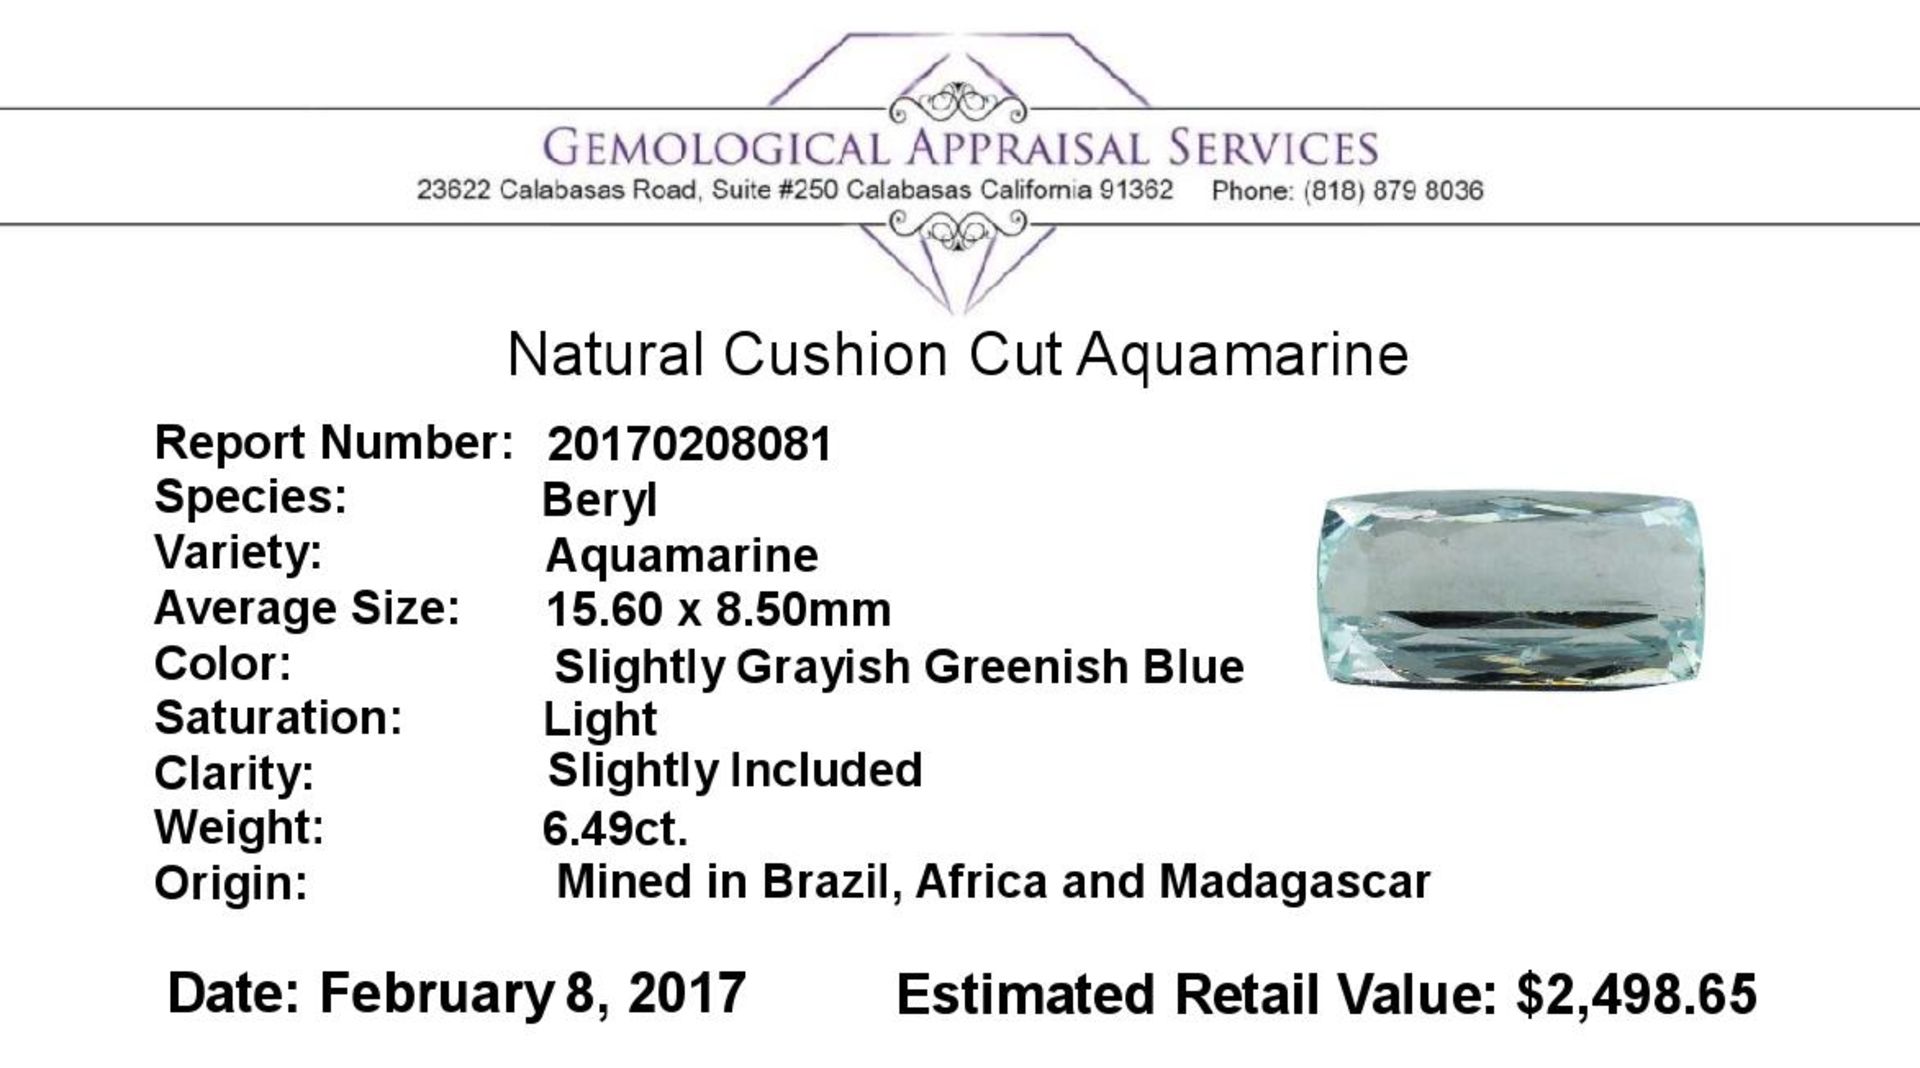 6.49 ct.Natural Cushion Cut Aquamarine - Image 2 of 2